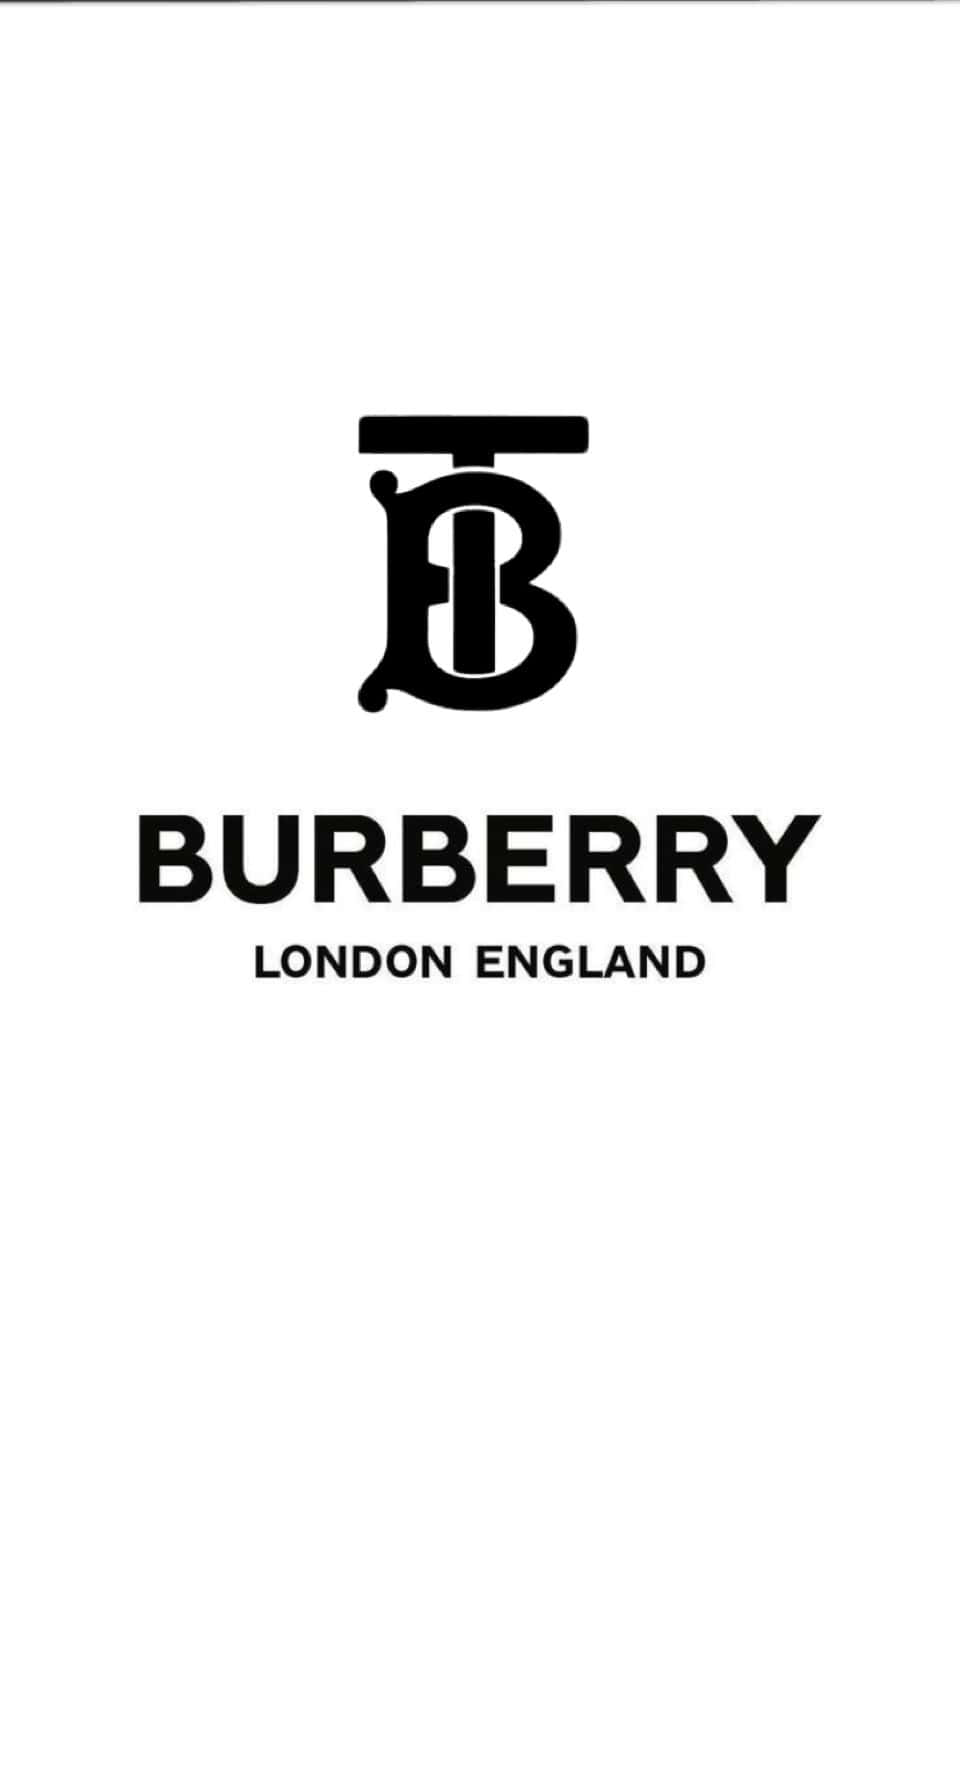 Burberrylondon England Logotypen.